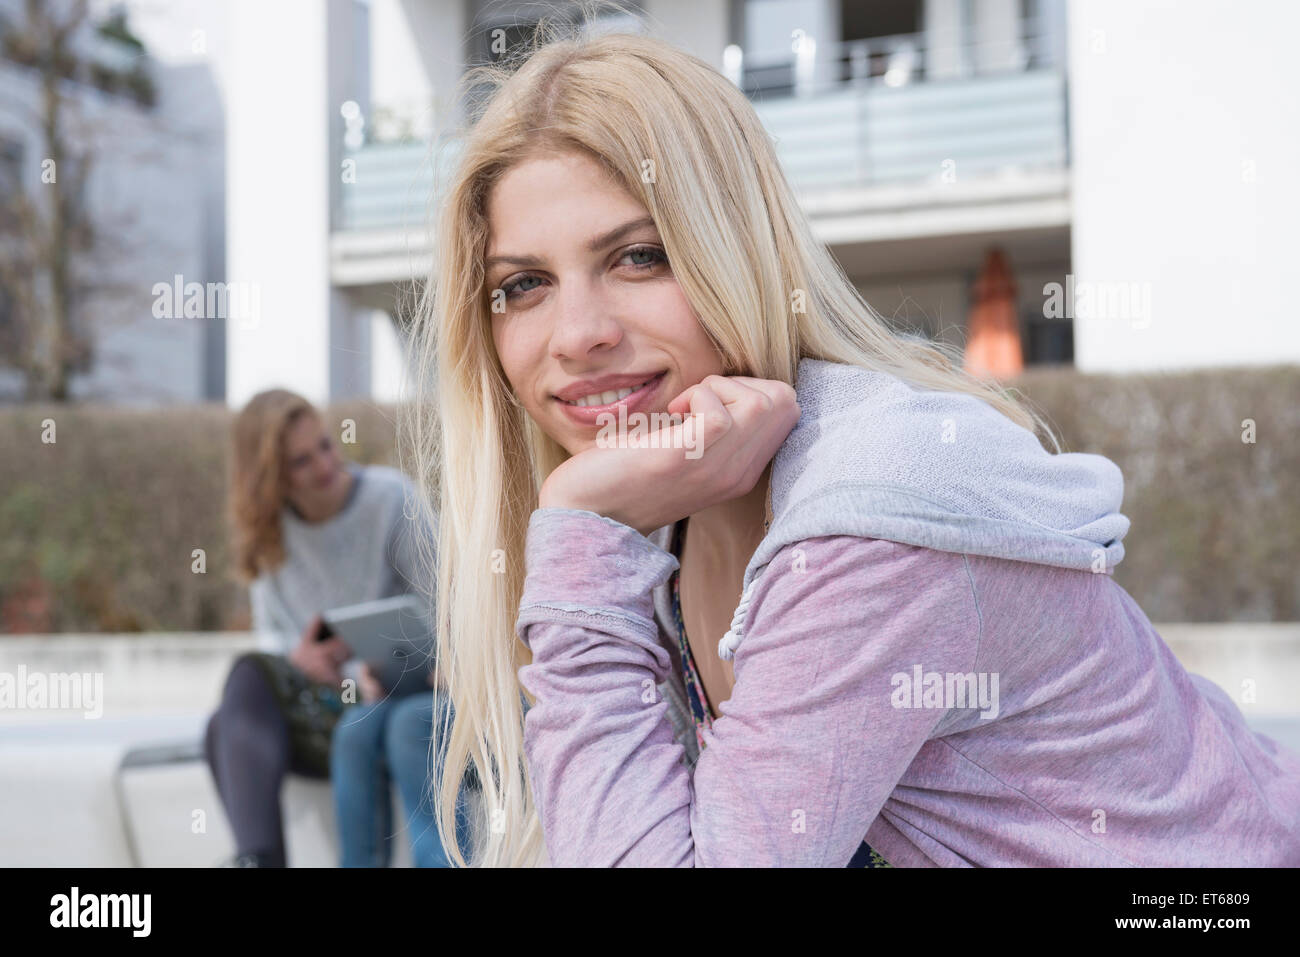 Teenage Girl Long Blonde Hair Blond Hand On Chin Stock Photos